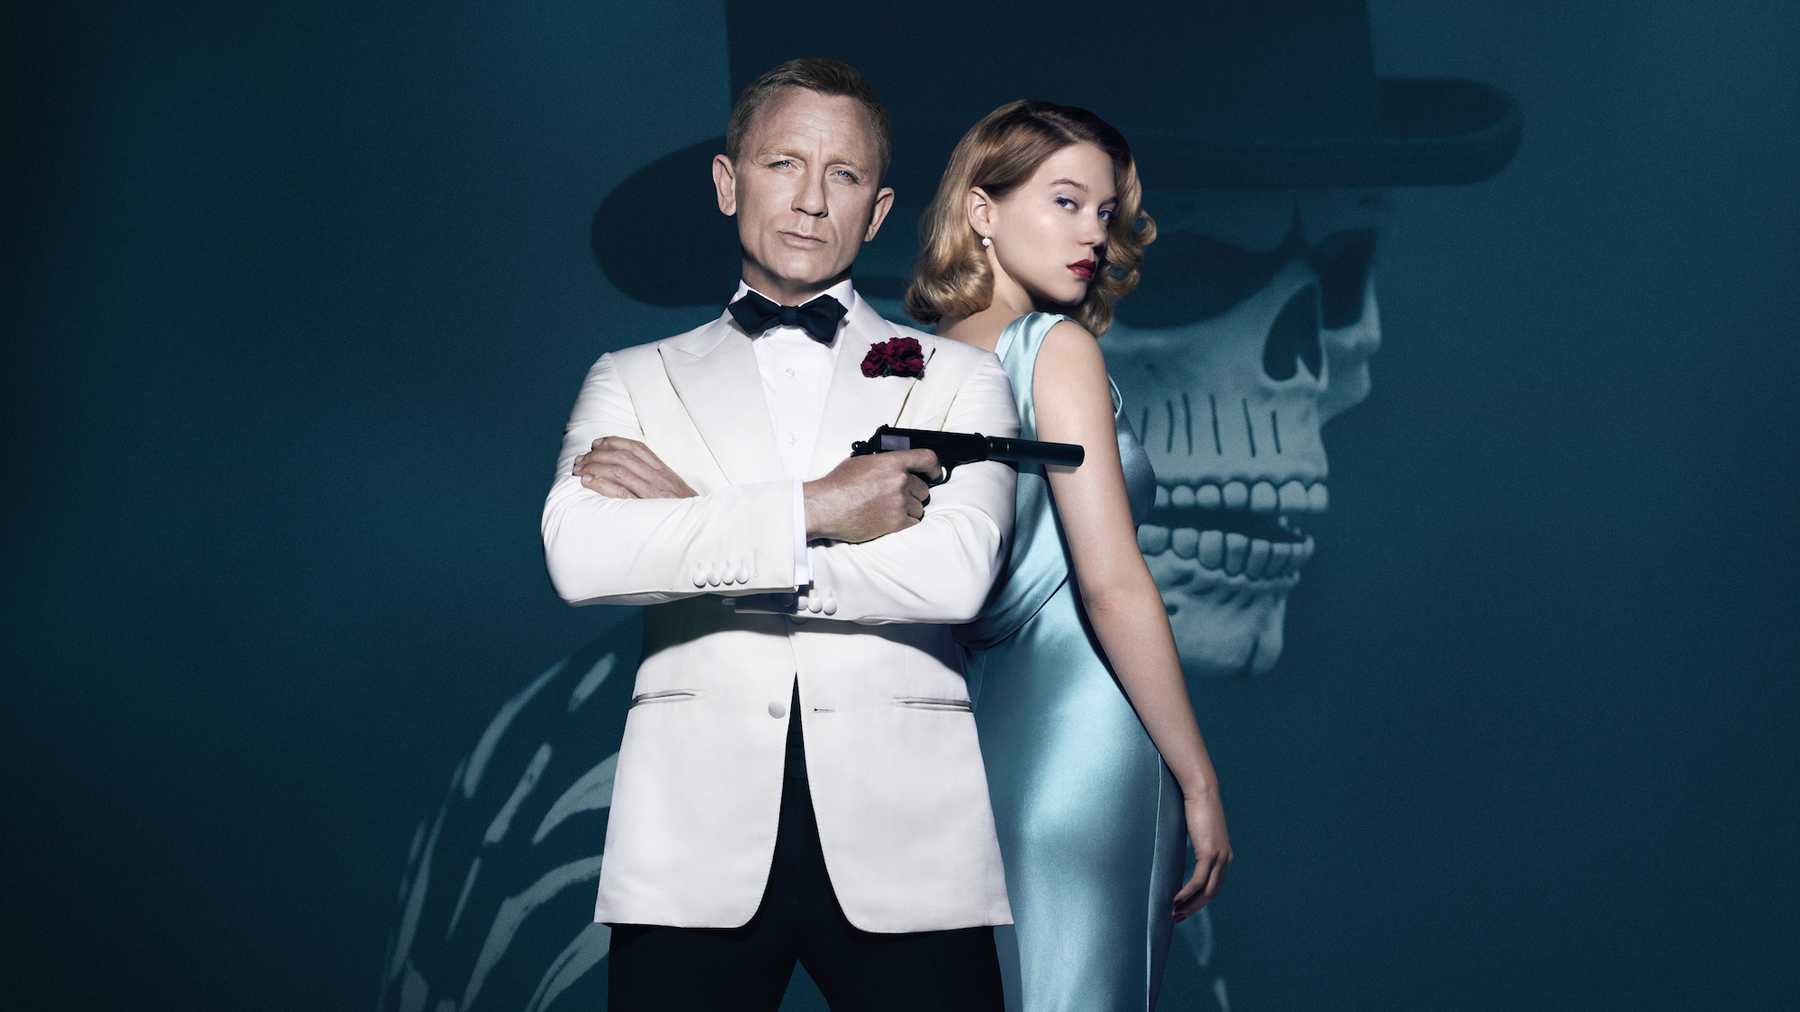 A promotional image for James Bond movie Specter